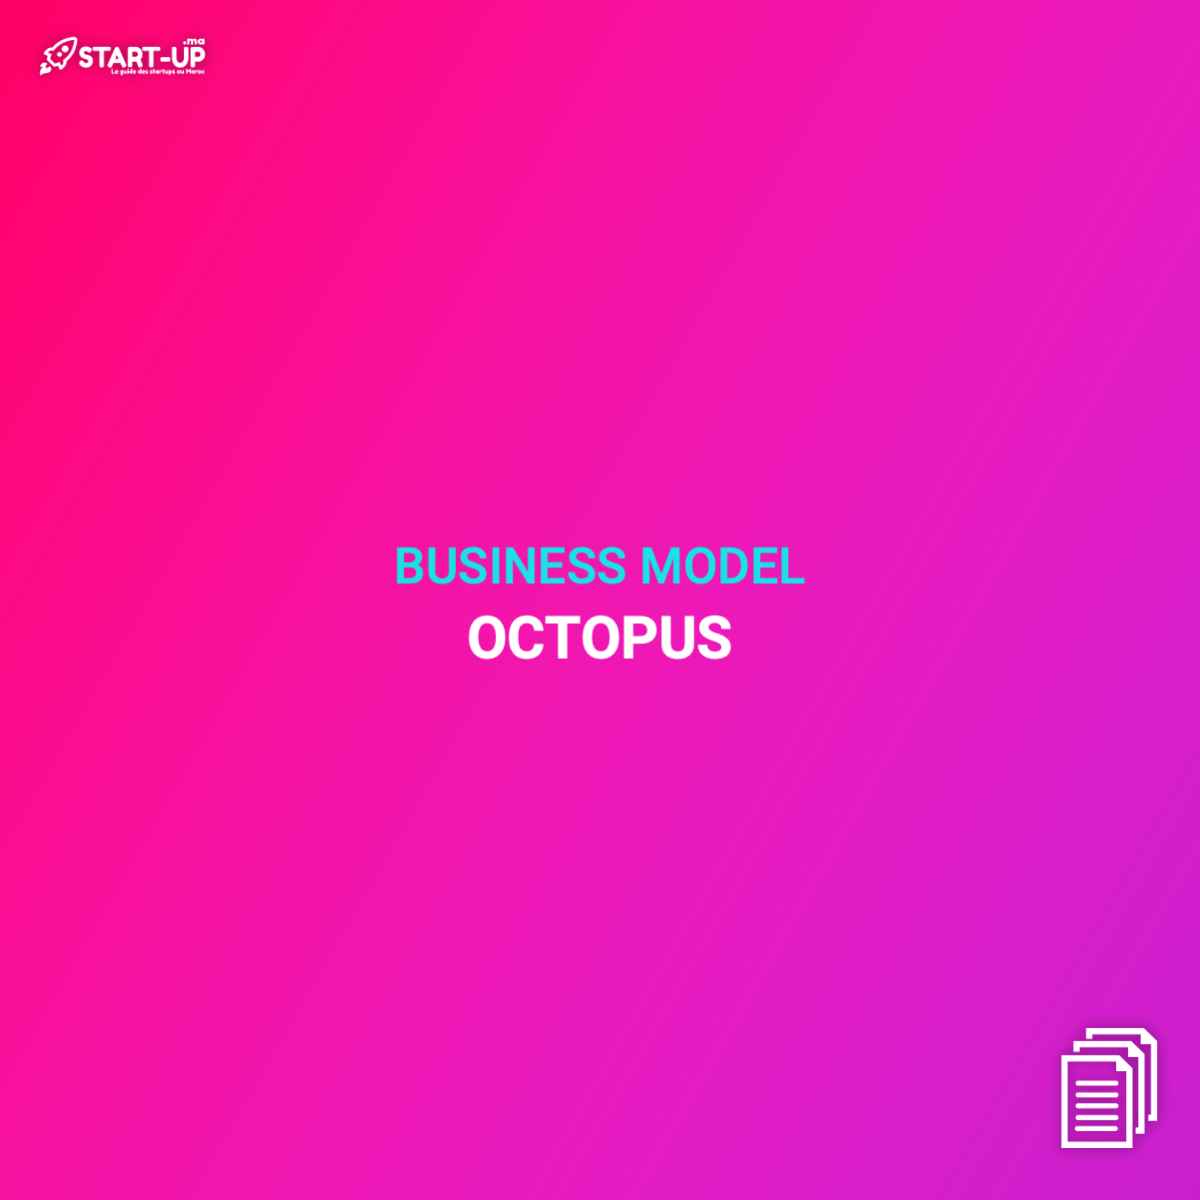 Octopus Business Model